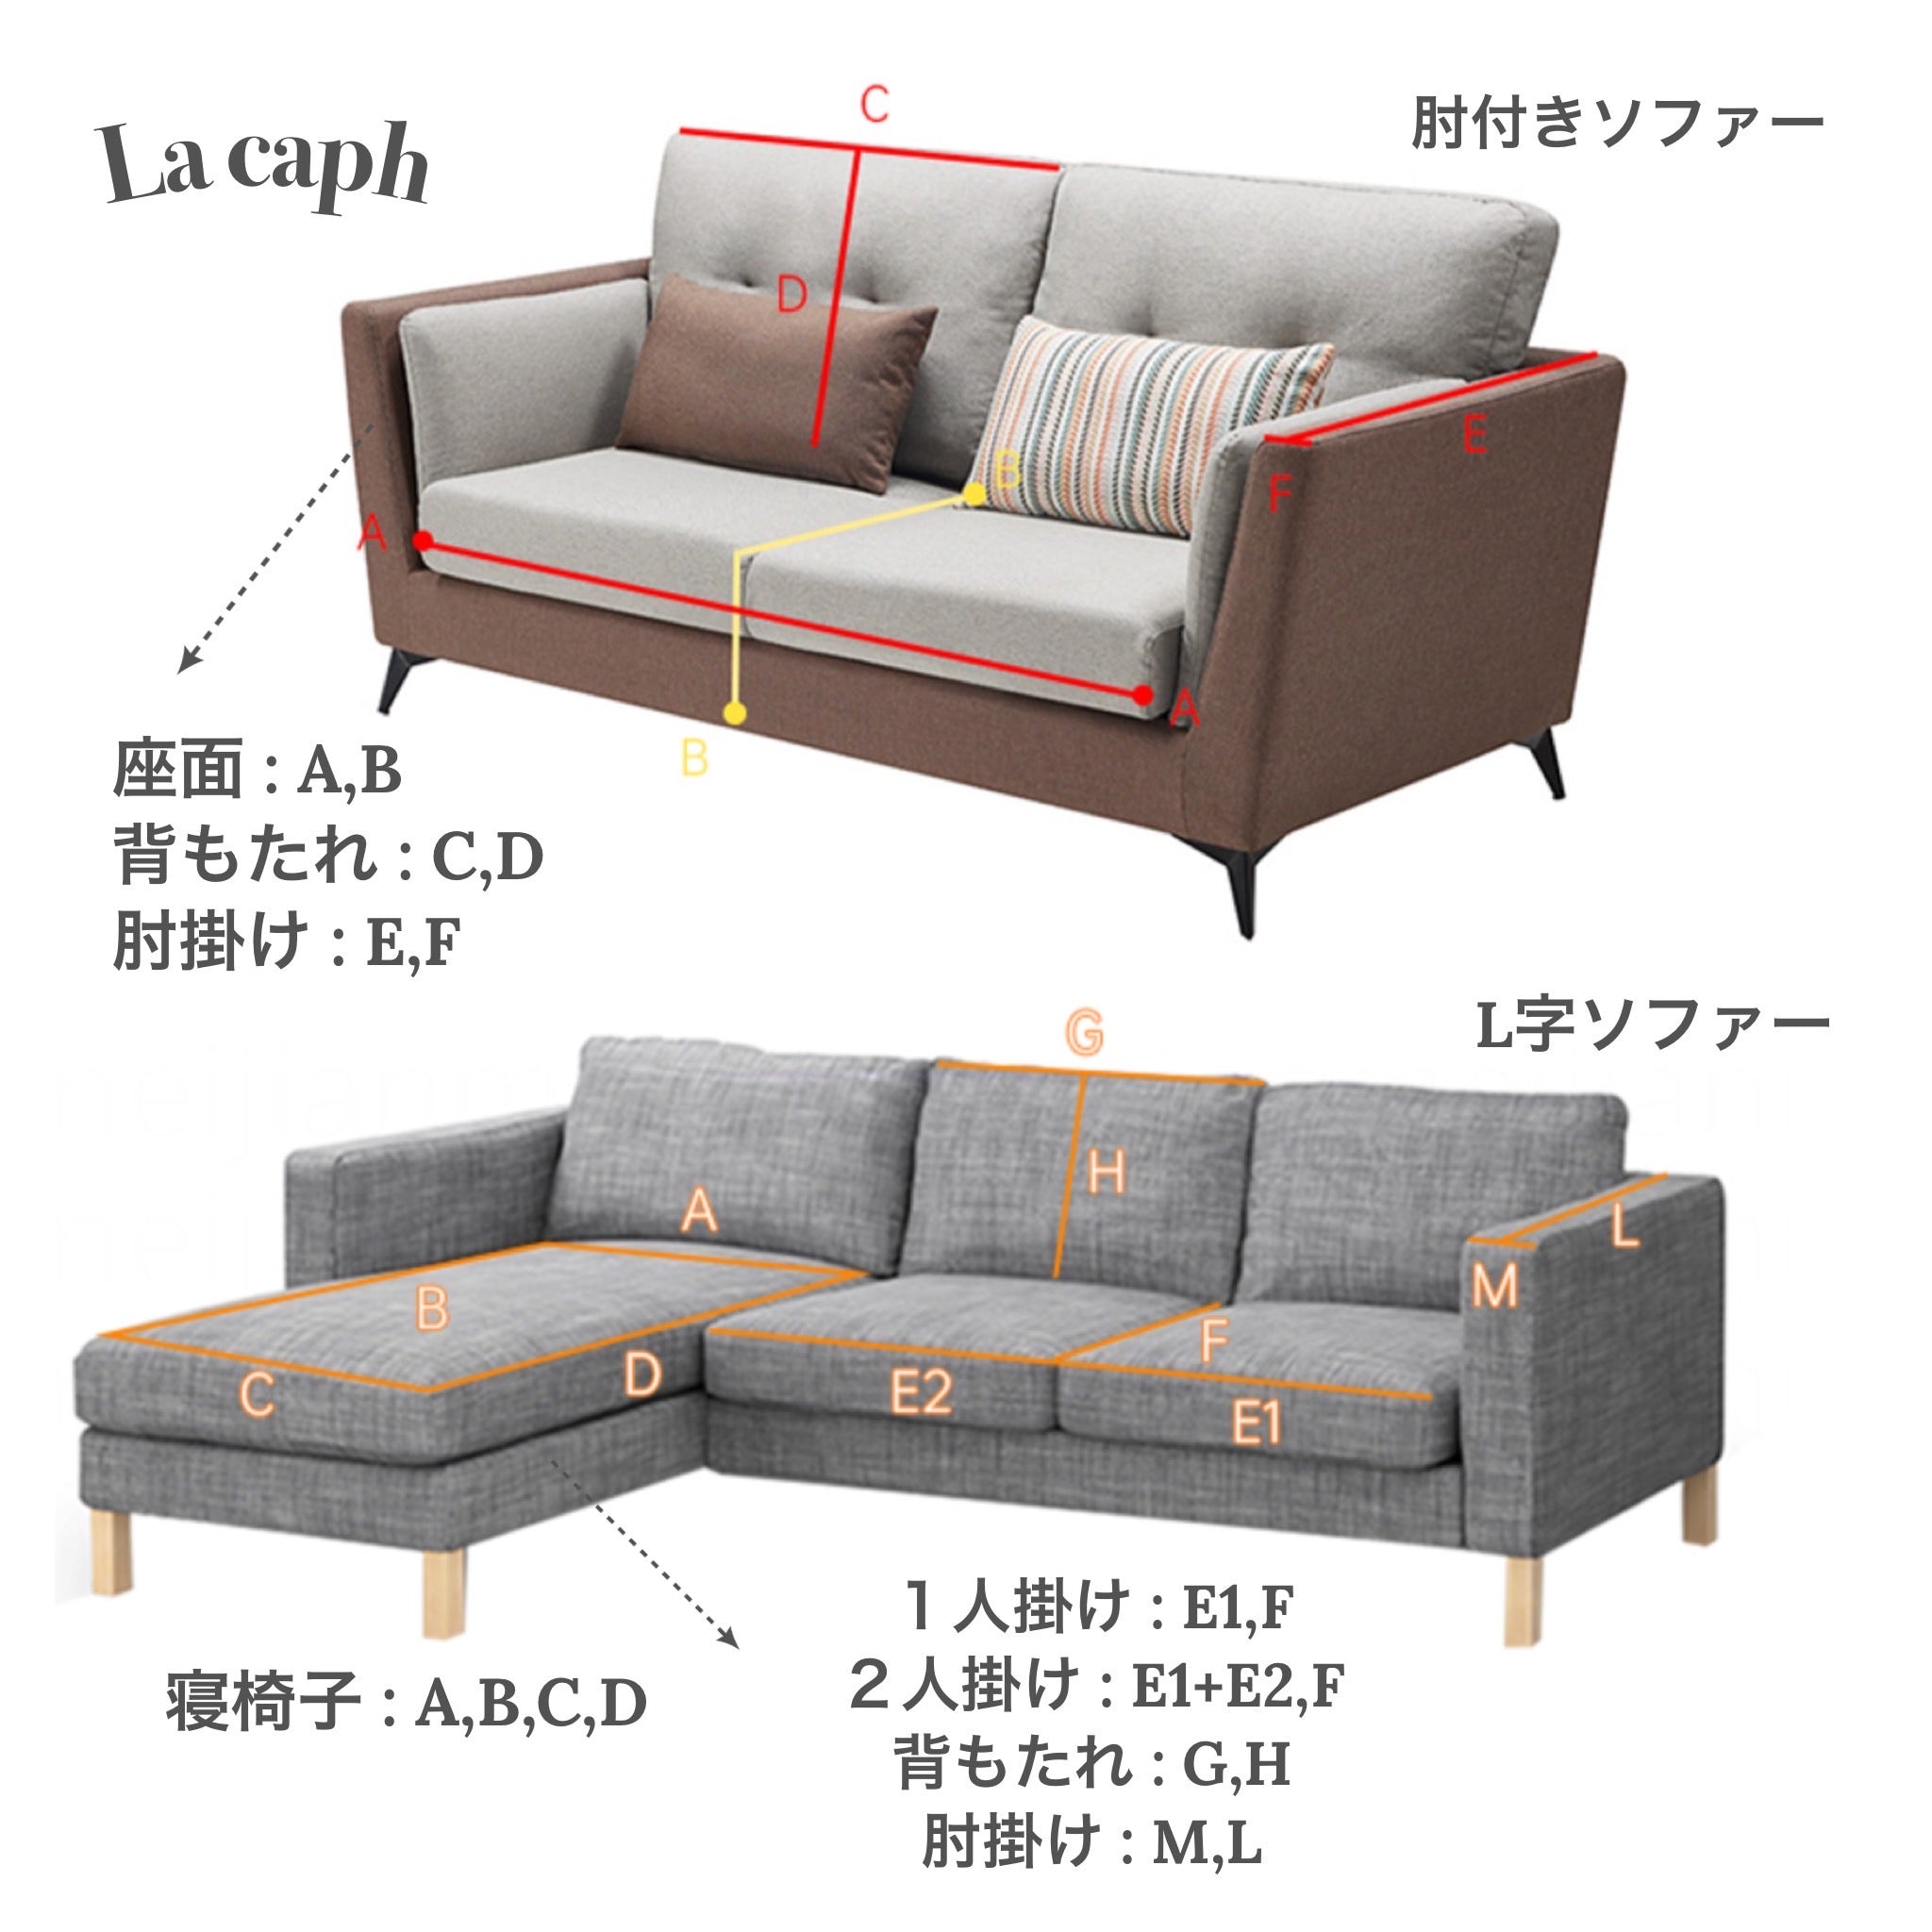 3color block pattern sofa cover